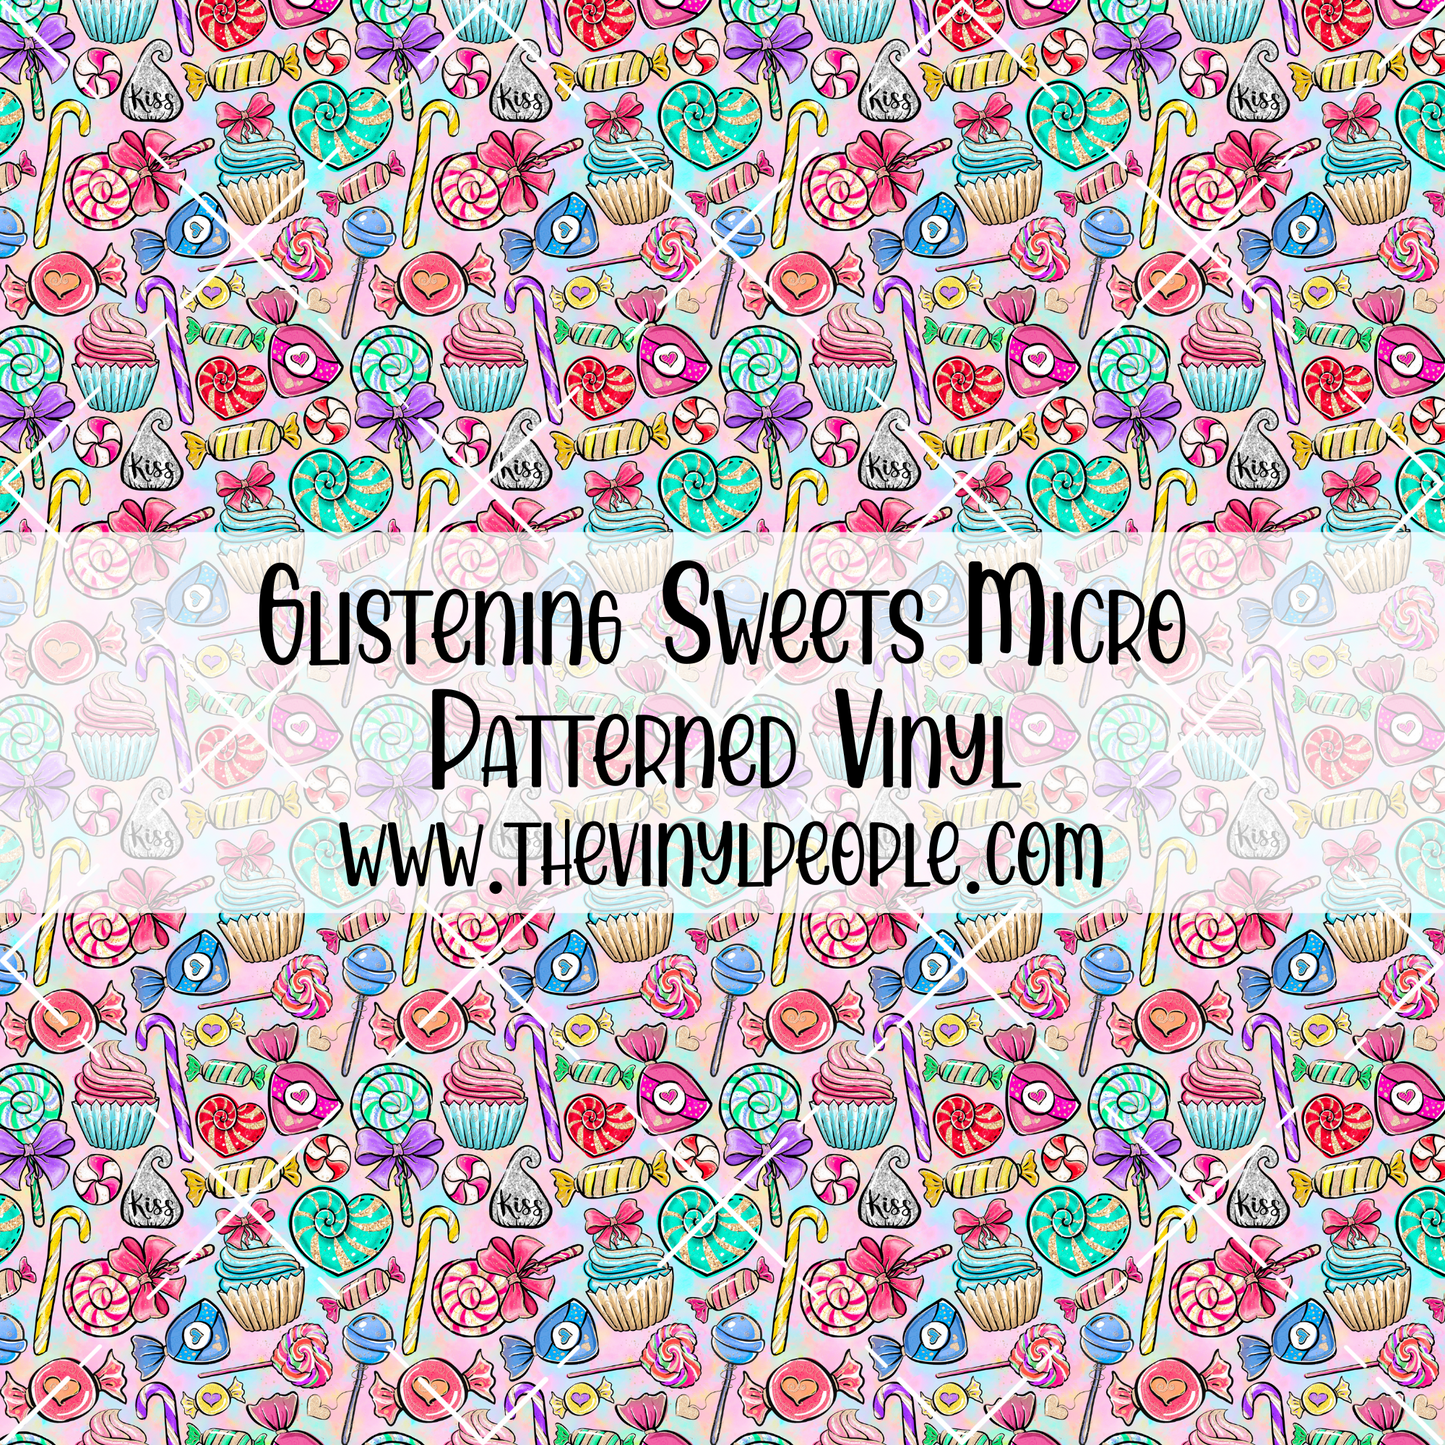 Glistening Sweets Patterned Vinyl